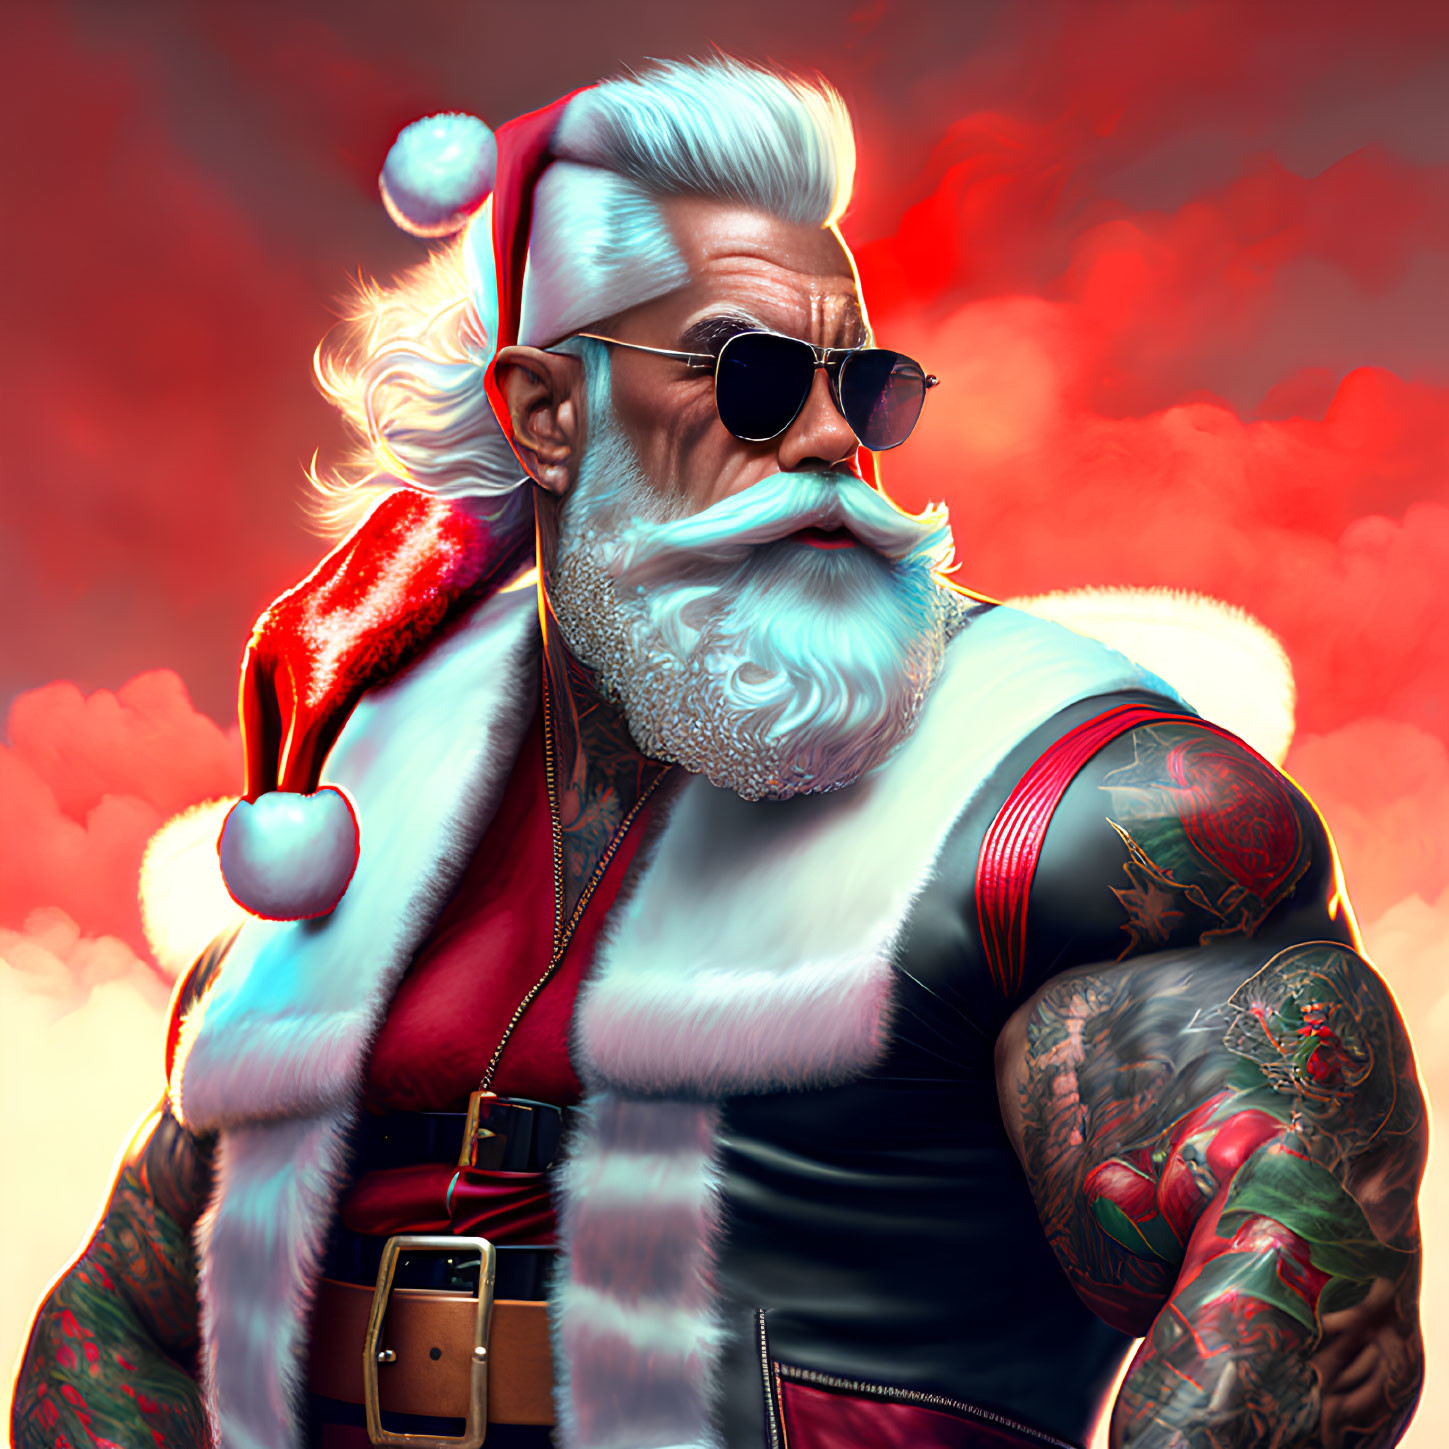 Hip tattooed Santa Claus illustration with sunglasses and white beard